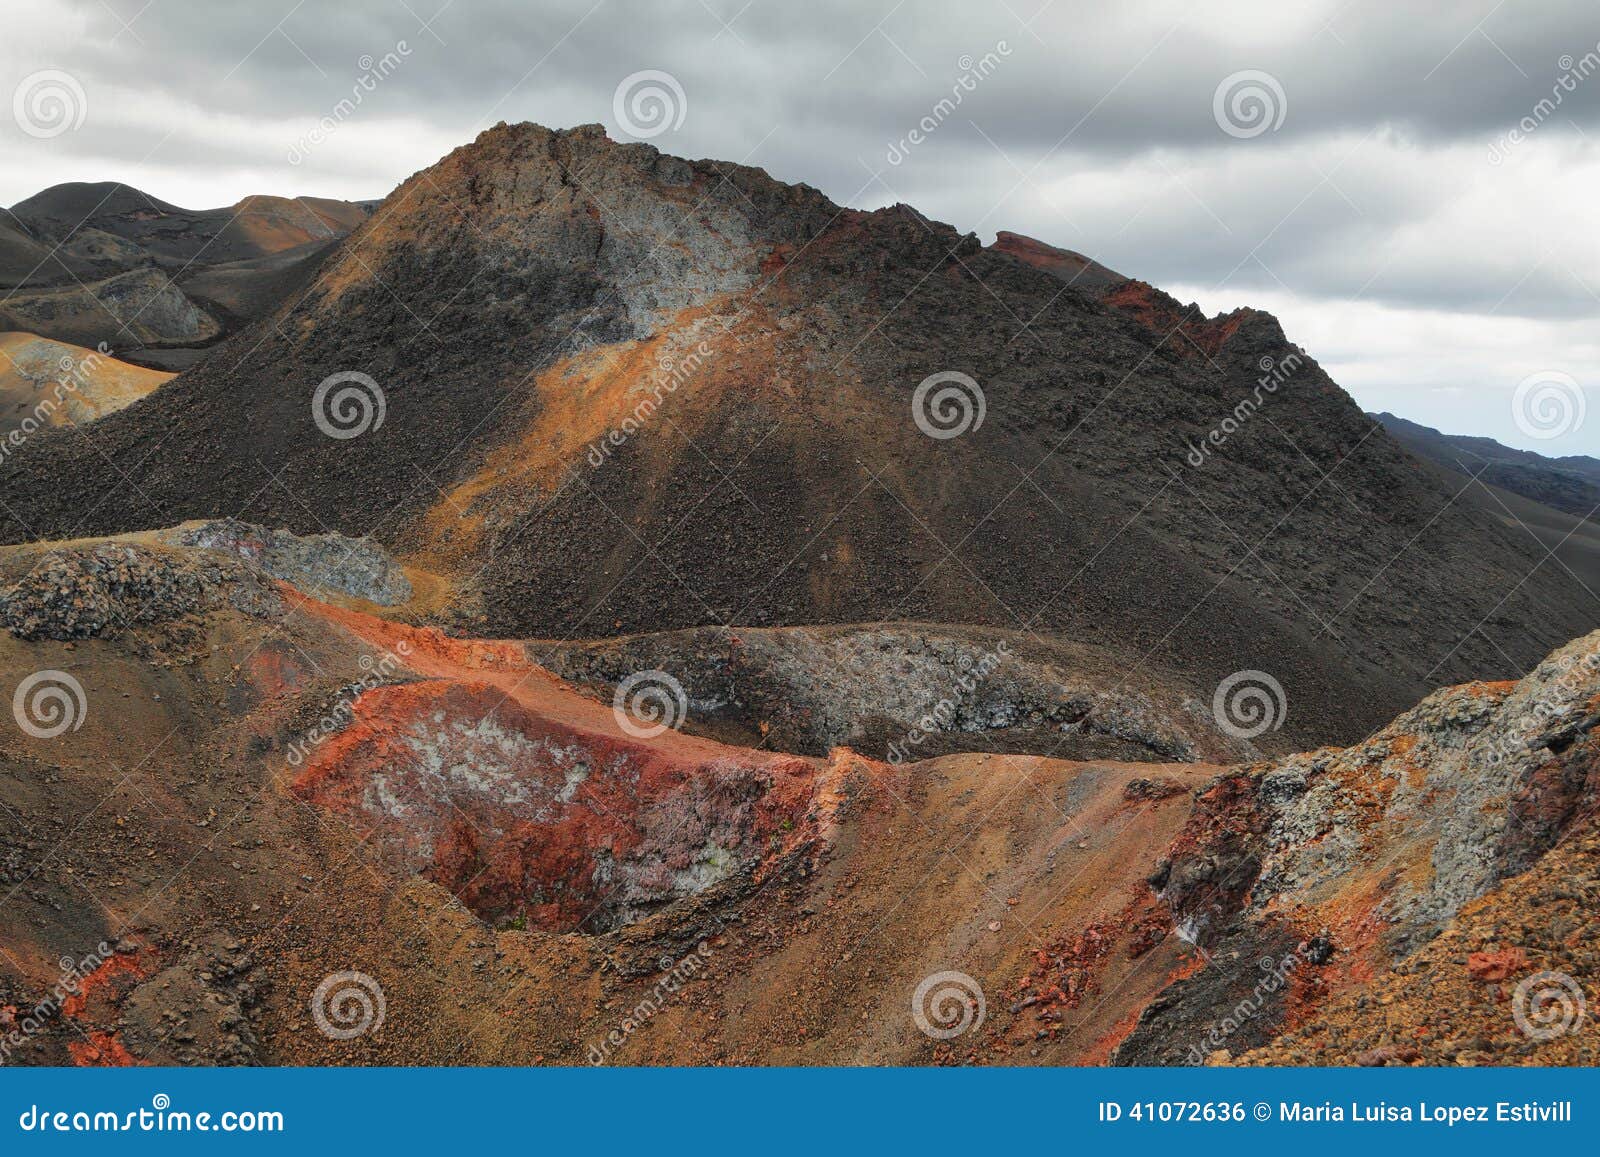 volcanic landscape, sierra negra, galapagos.